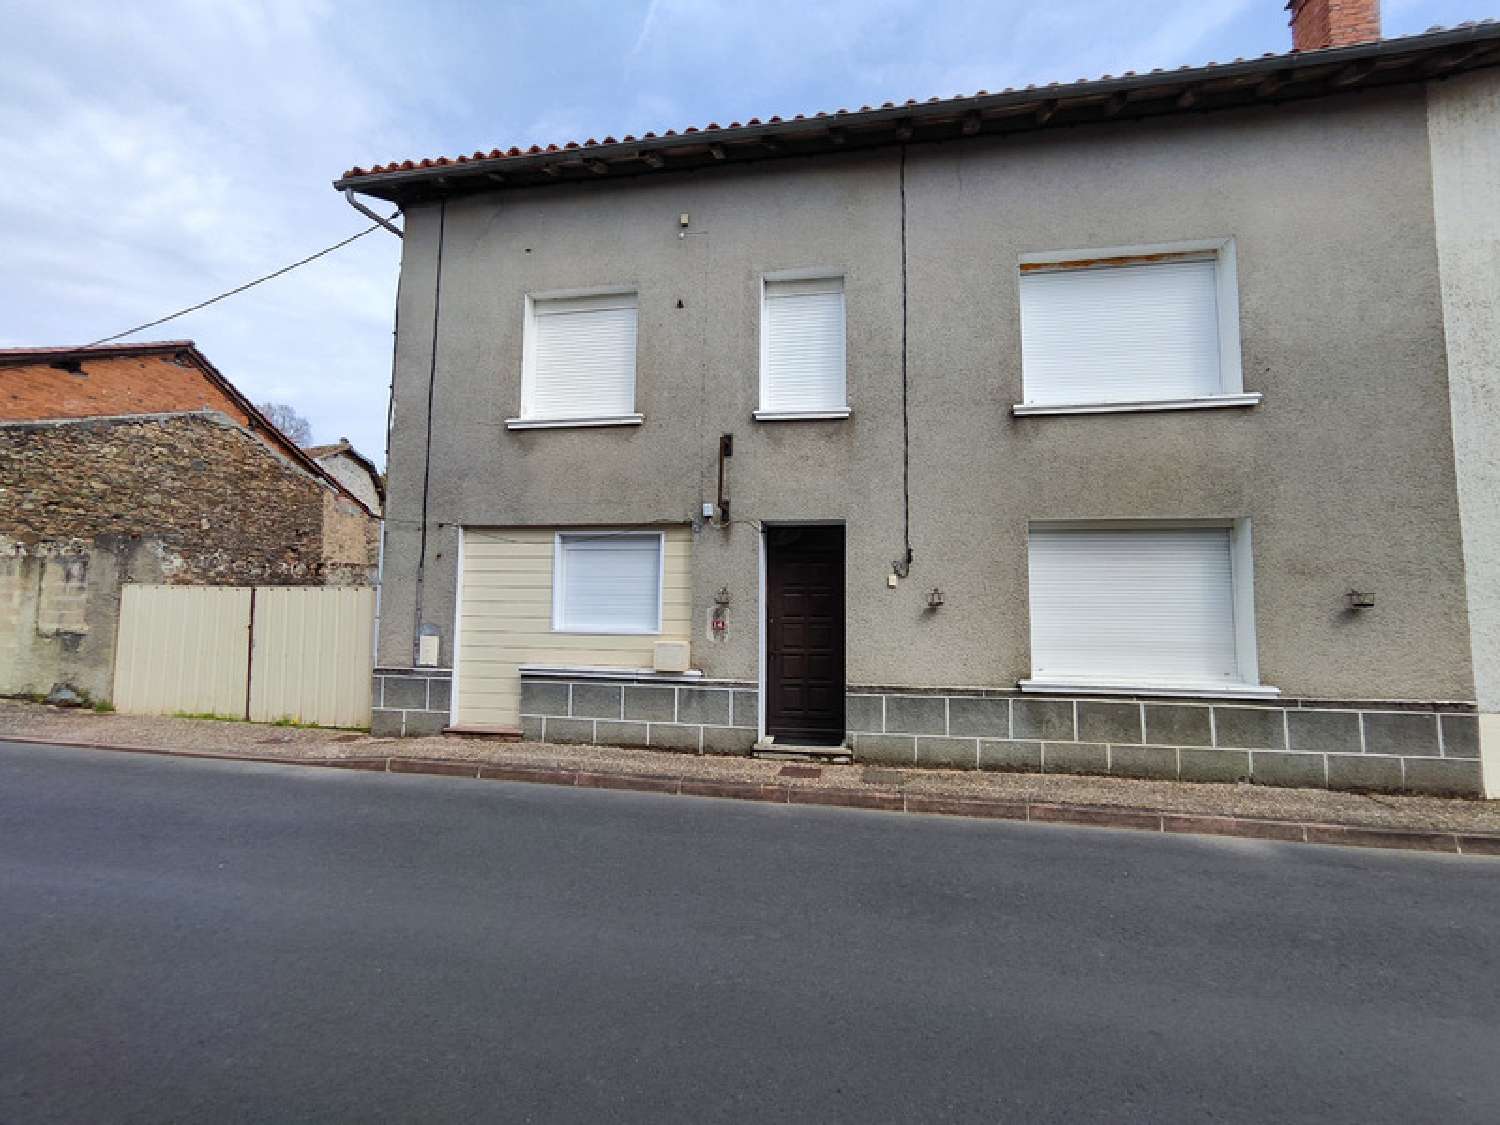  à vendre maison Saulgond Charente 1